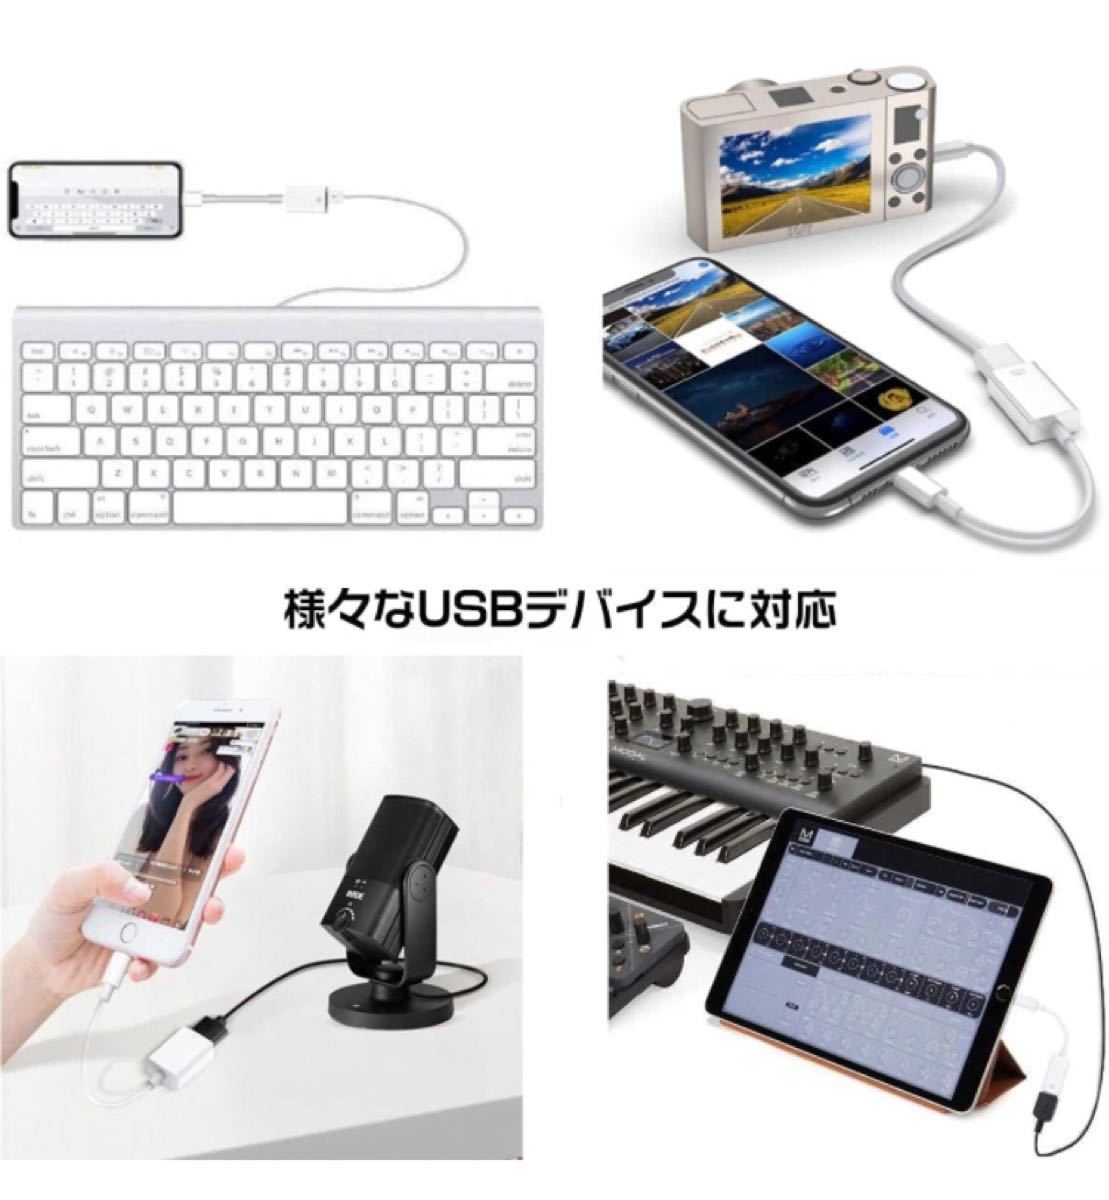 iPhone/iPad用 USB3.0 カメラ アダプタ OTG機能 